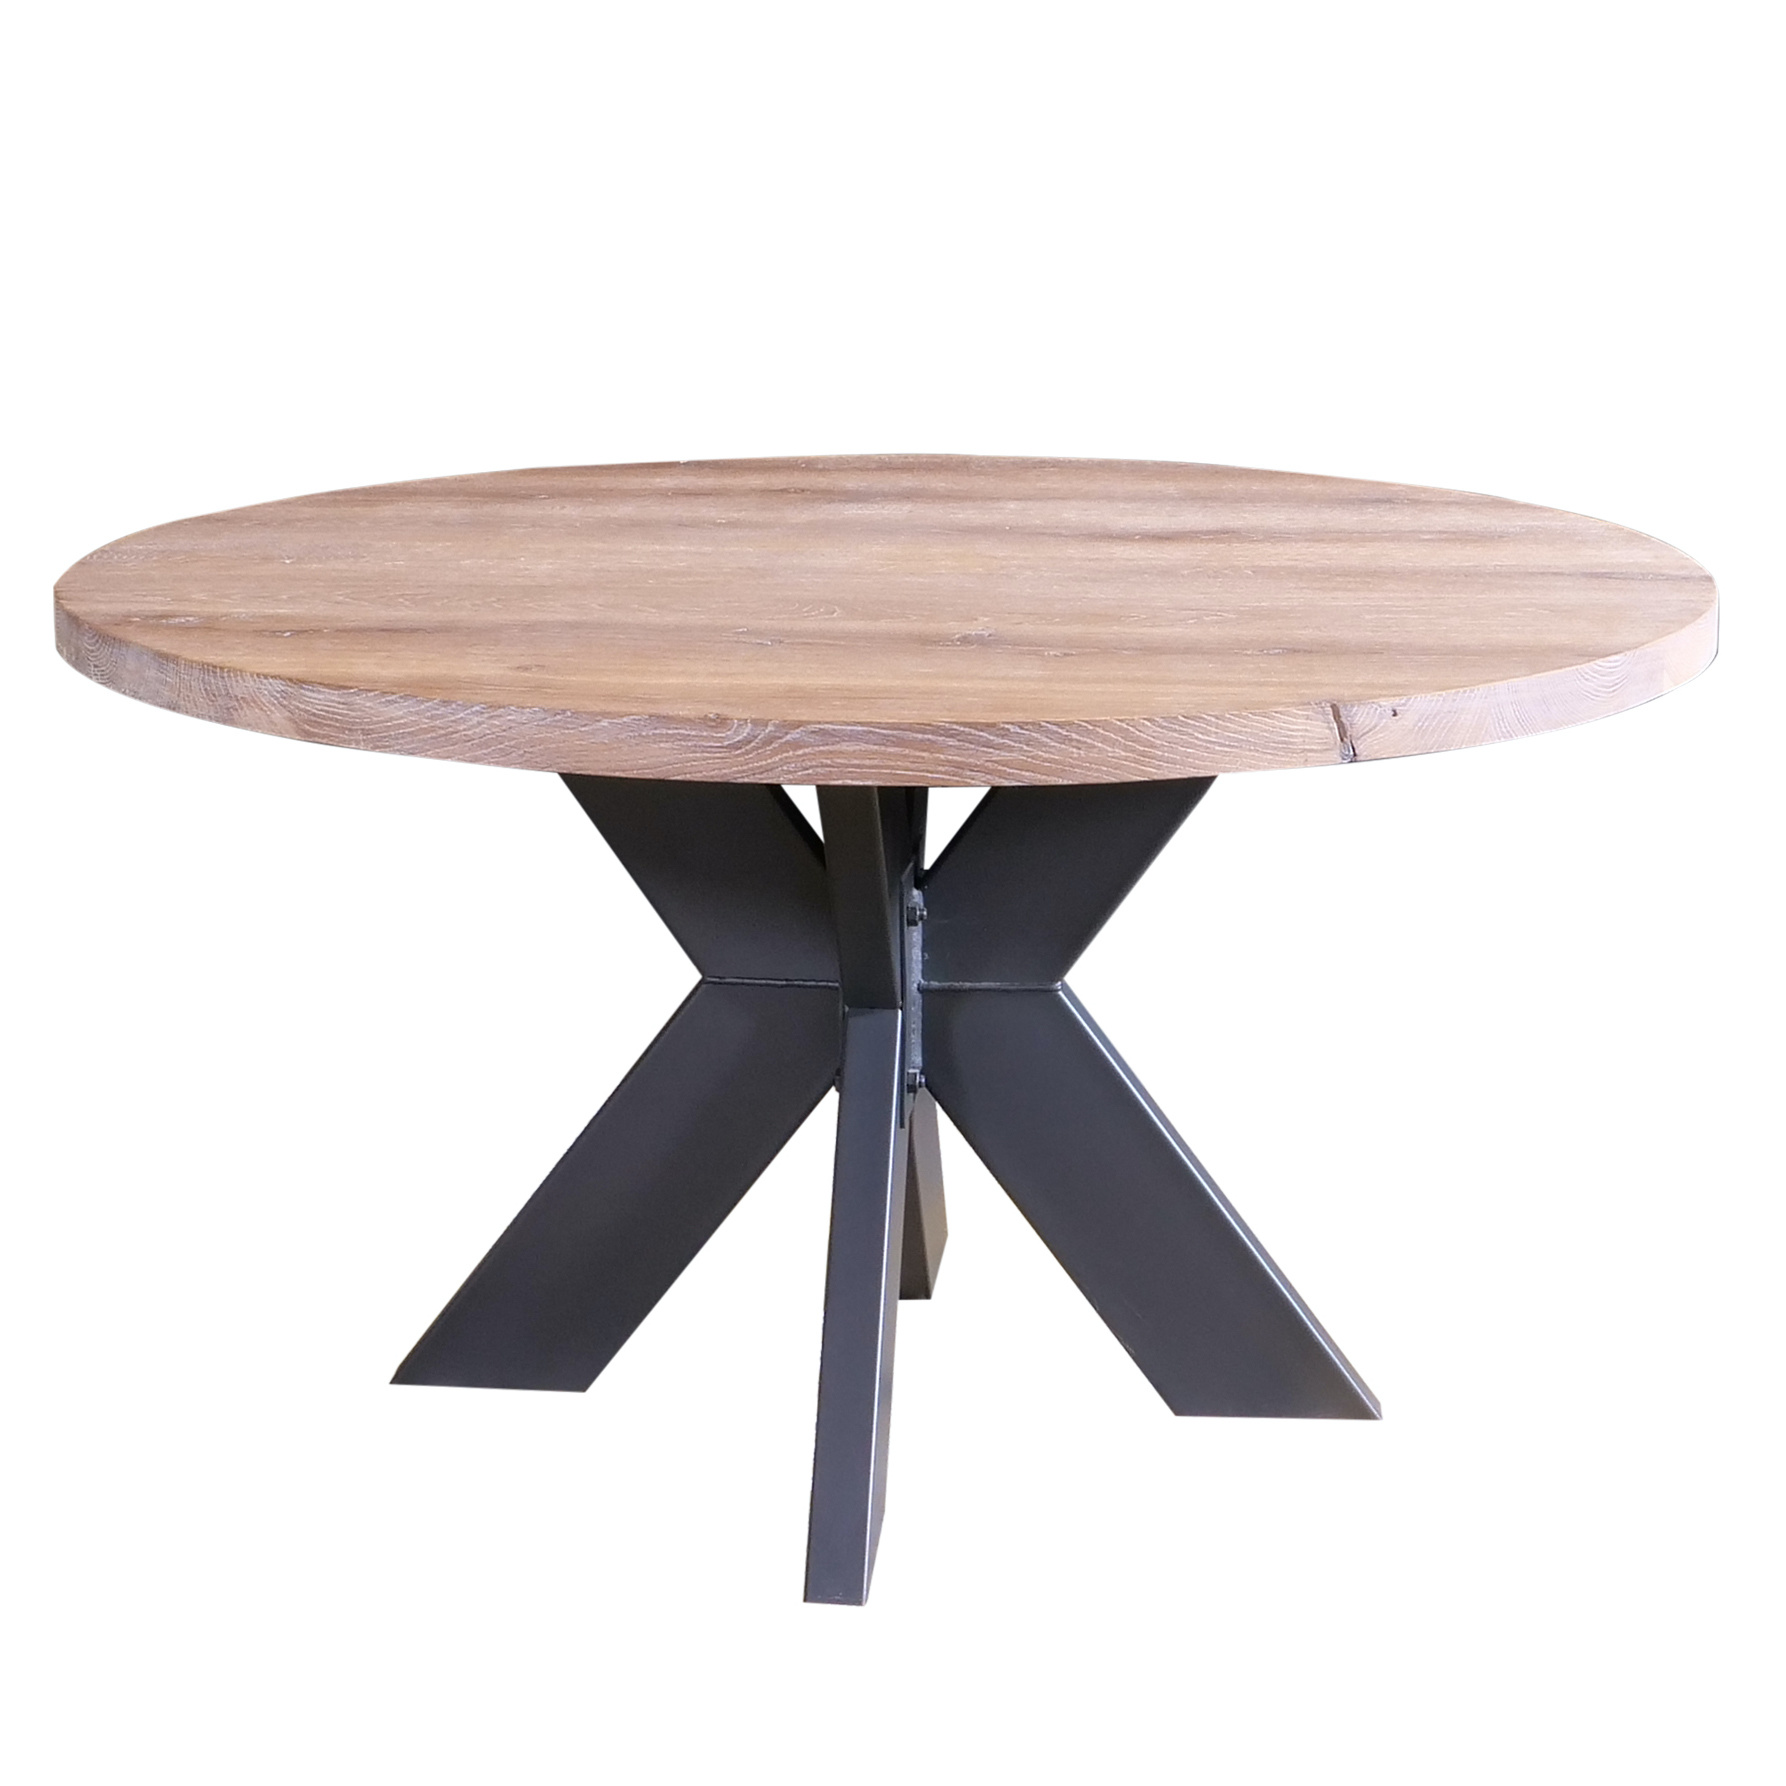  Eiken tafelblad rond - 4 cm dik (1-laag) - Diverse afmetingen - Rustiek Europees eikenhout - verlijmd kd 10-12%